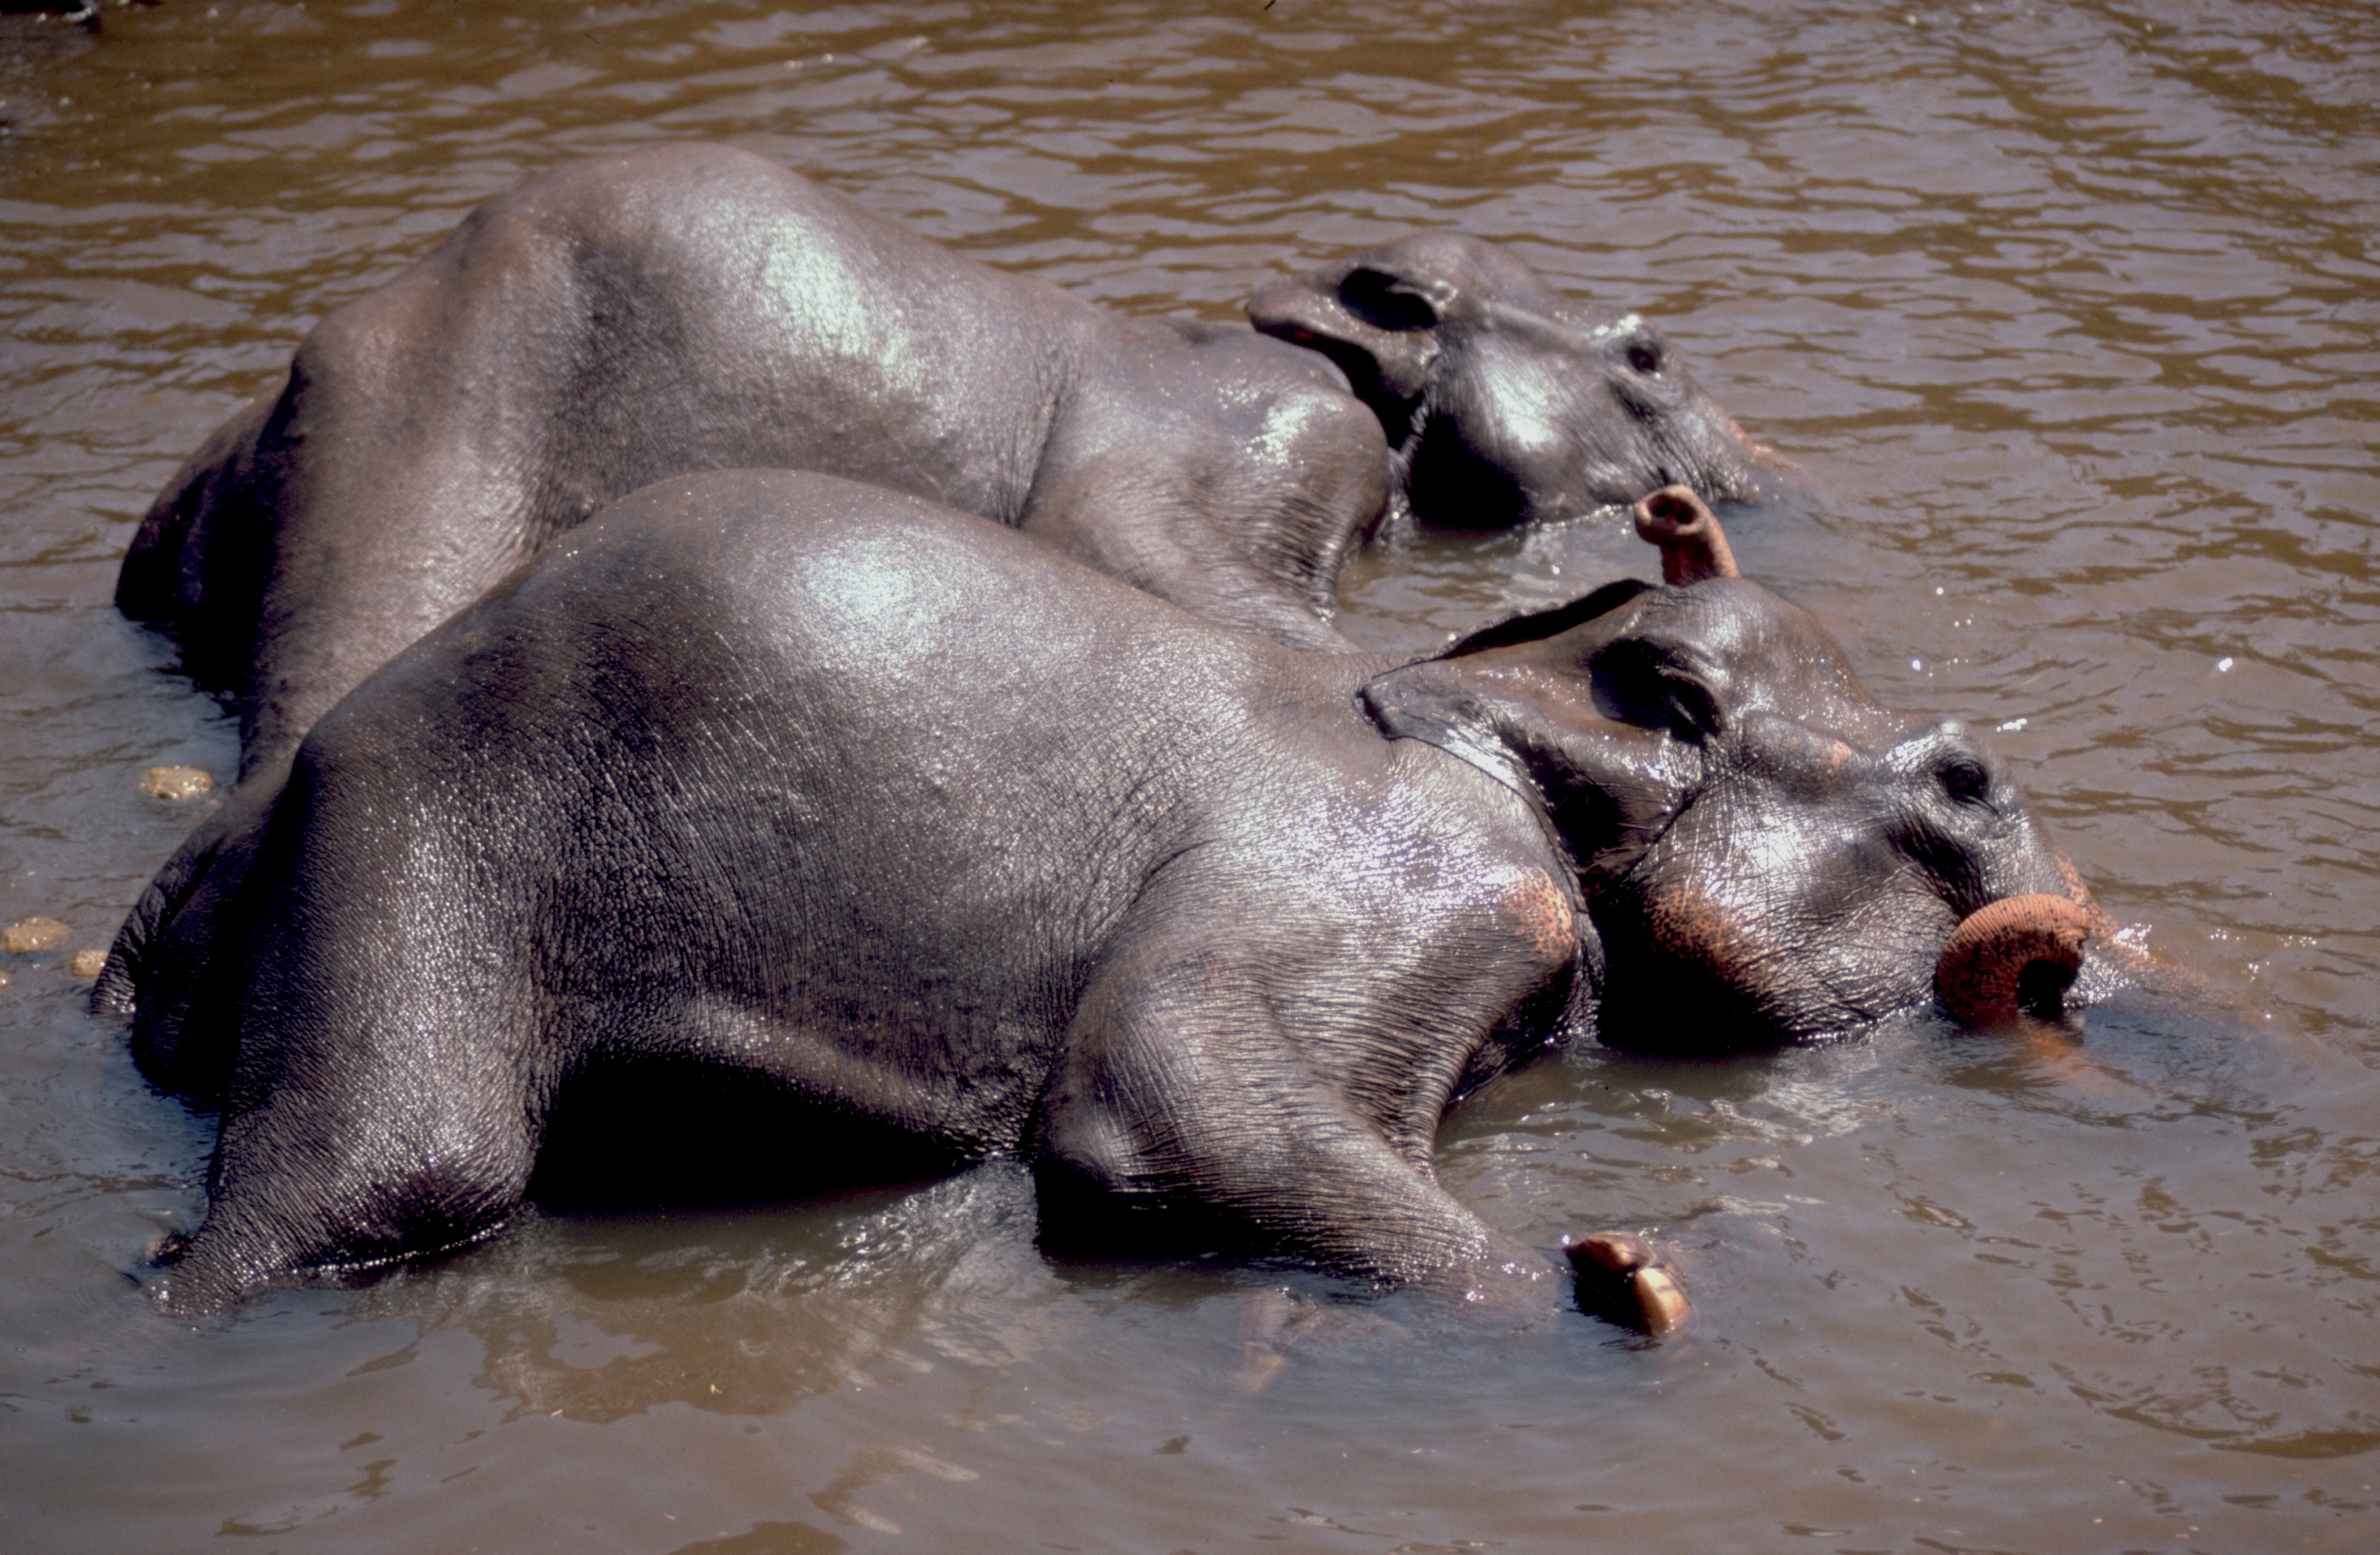 Sri Lanka: Indian Elefants taking a bath in the river at Pinawela Reserve